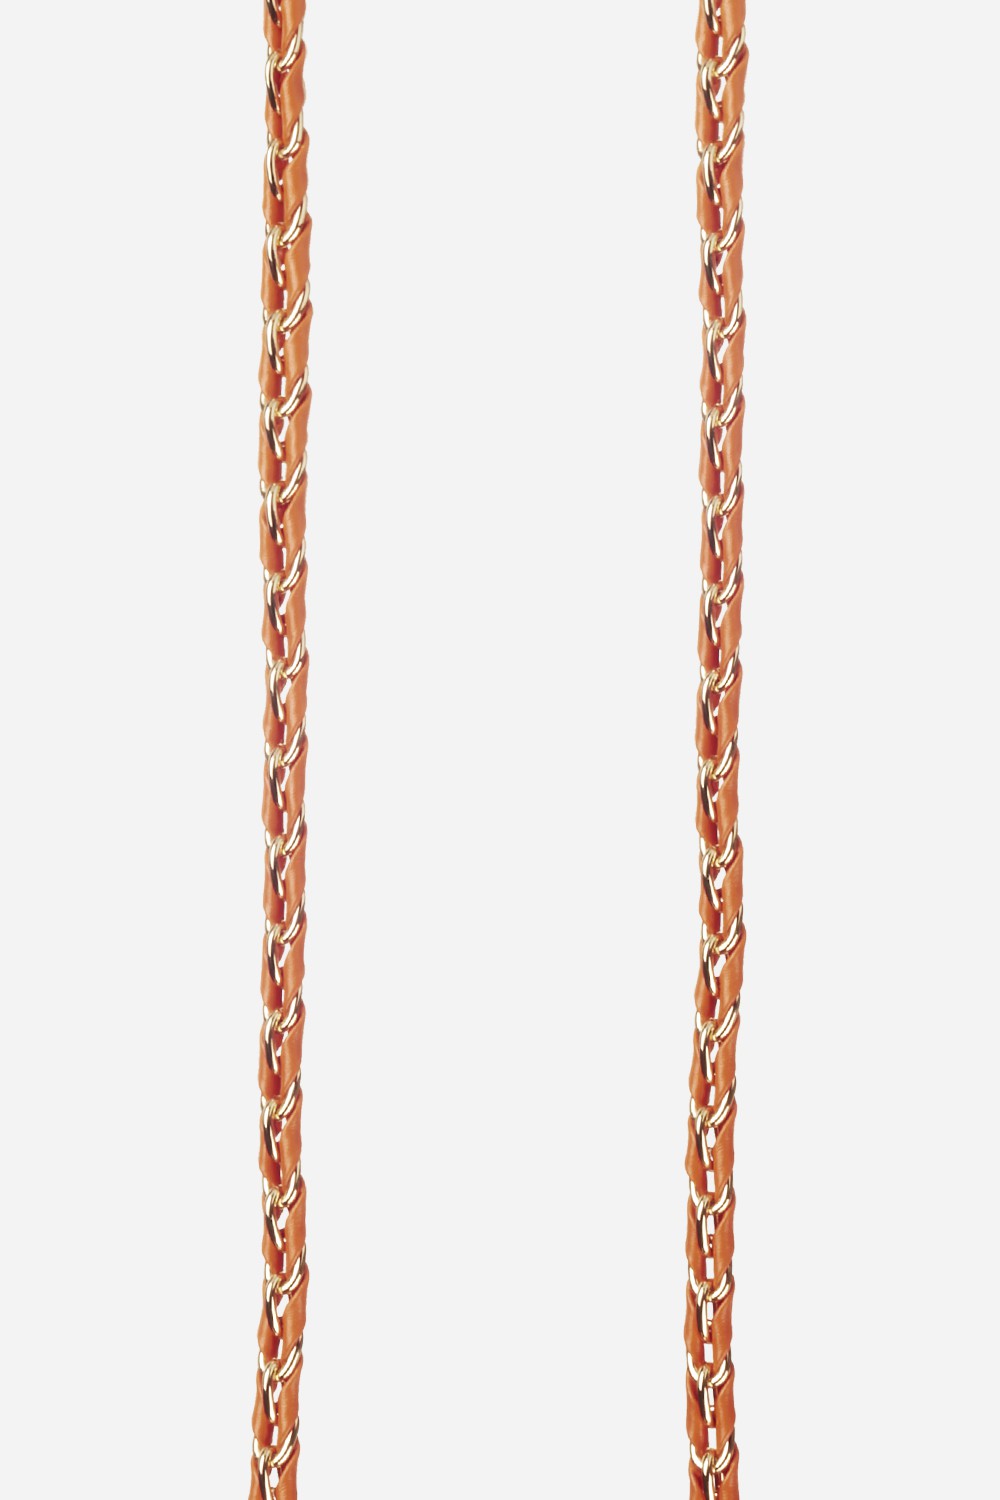 Lou Camel Long Chain 120 cm